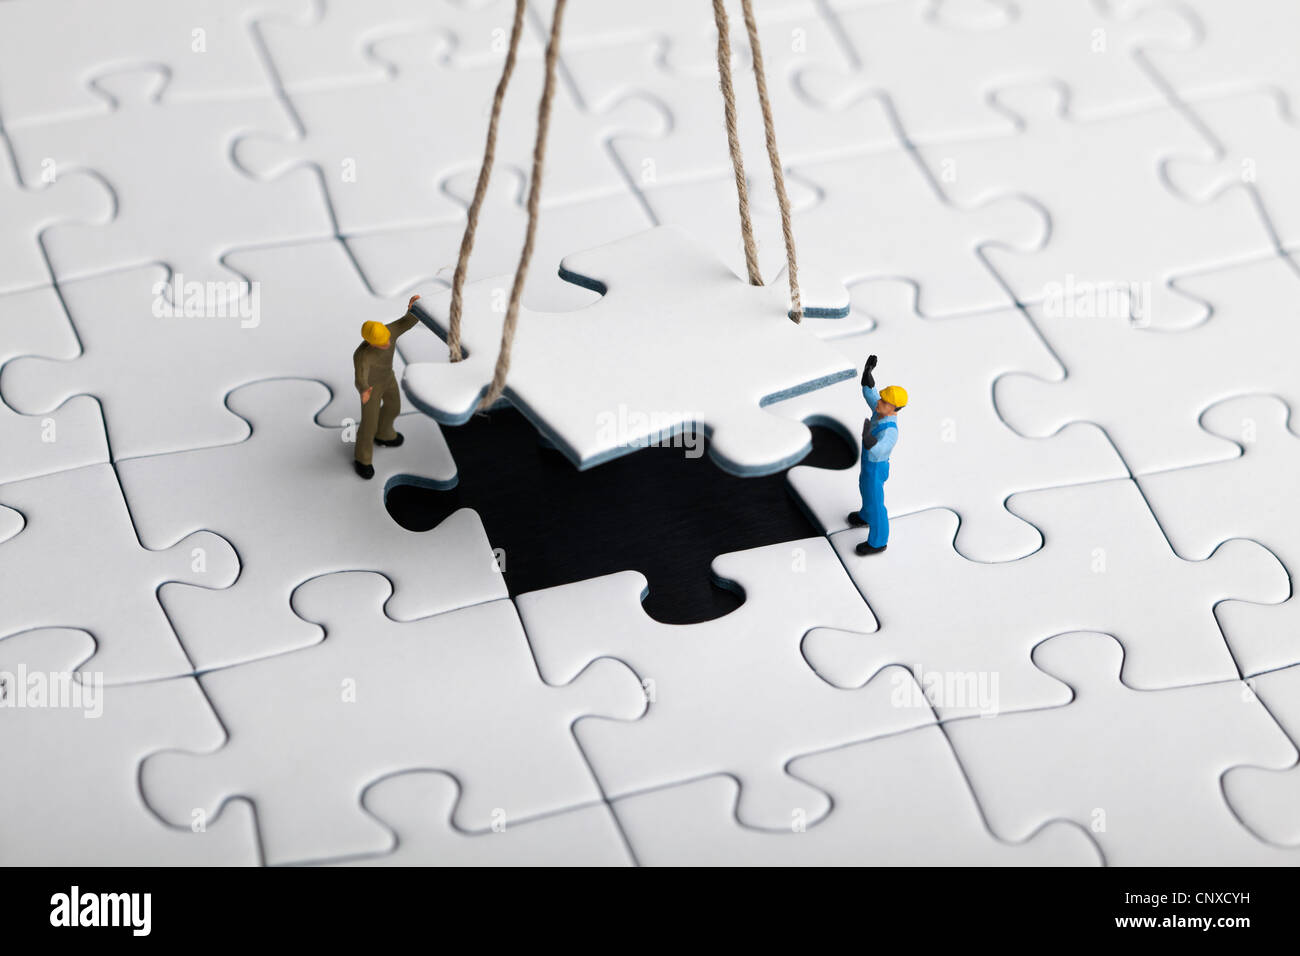 Miniature workmen guiding a hanging puzzle piece into place Stock Photo